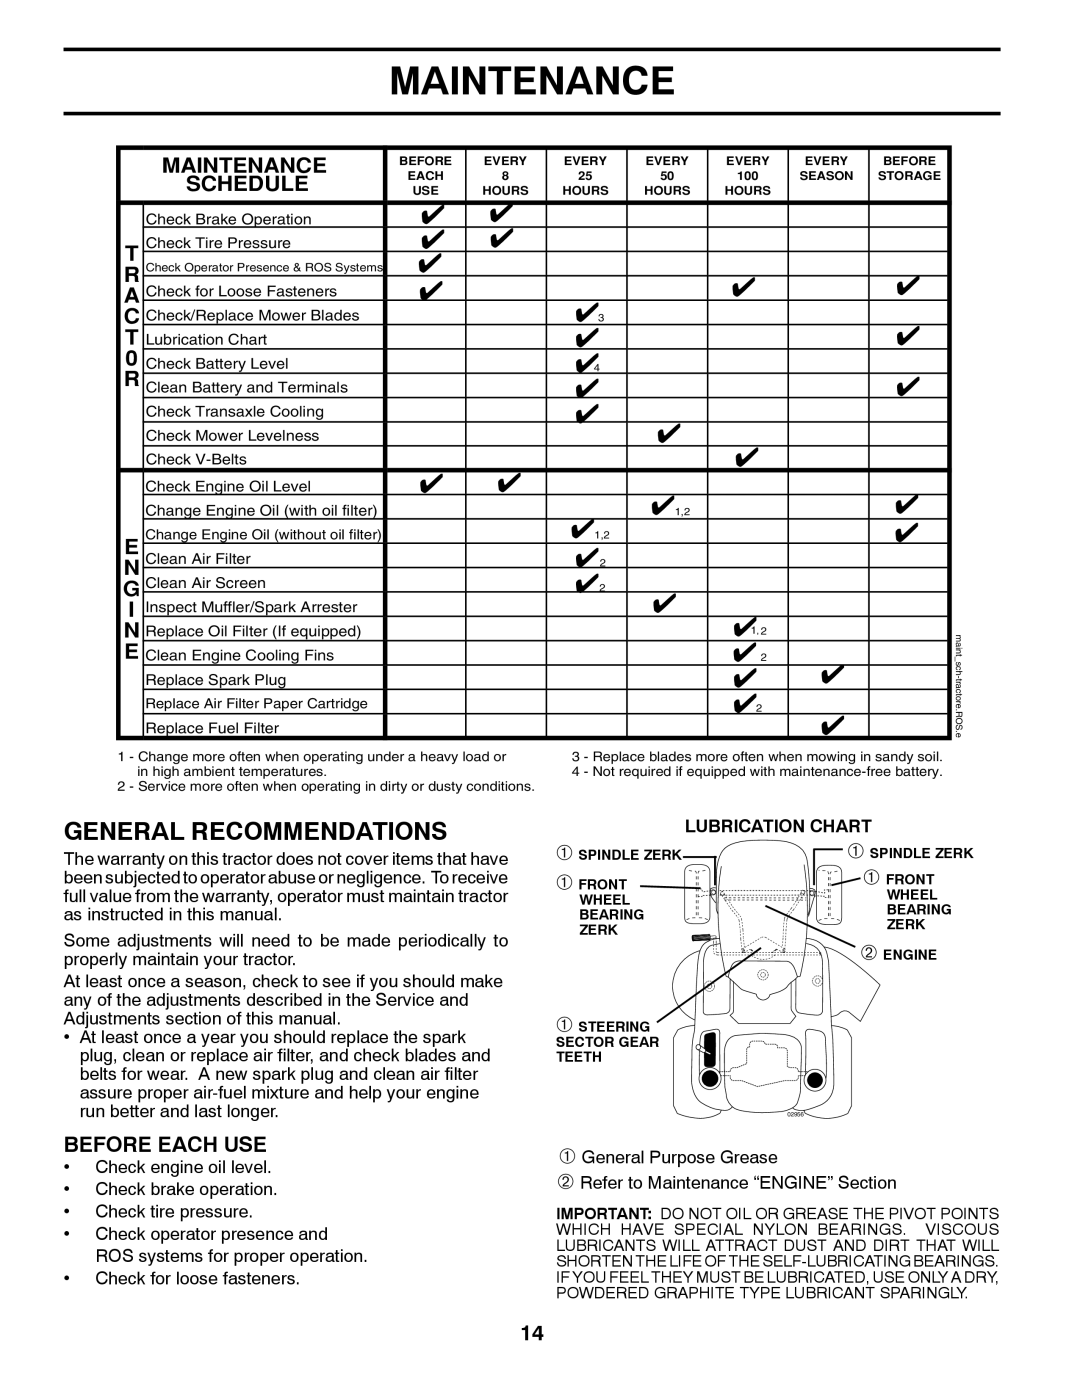 Univex 96043004400, 2348LS owner manual Maintenance, Lubrication Chart 